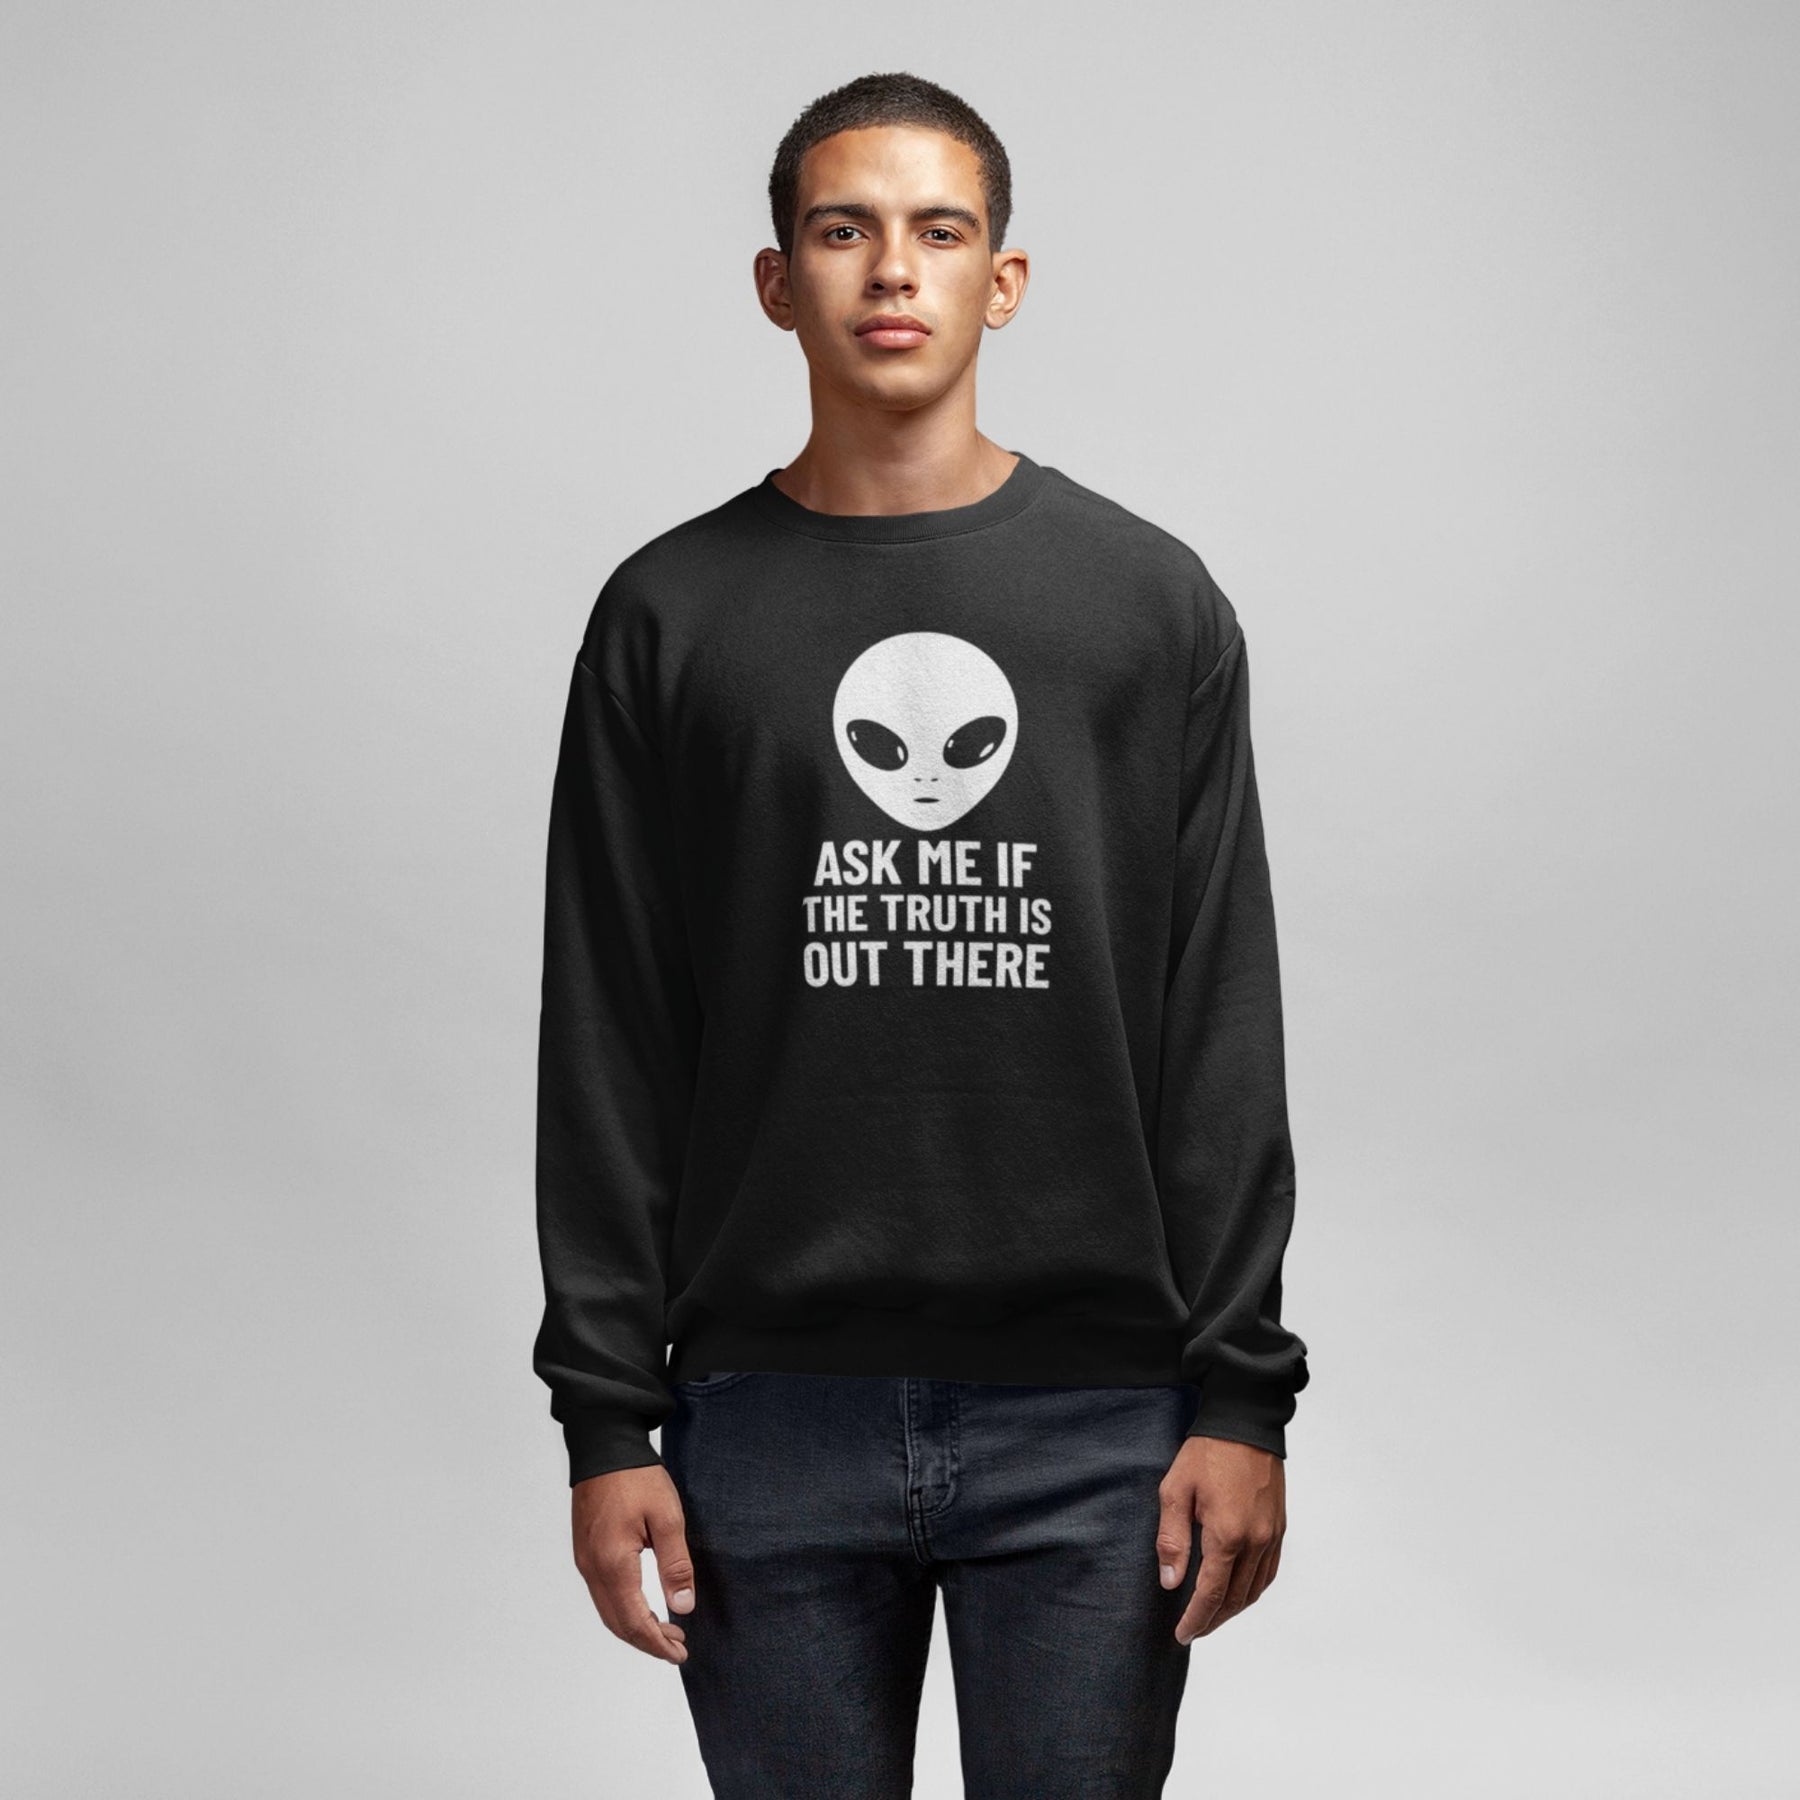 ask-me-truth-cotton-printed-unisex-black-men-model-sweatshirt-gogirgit-com